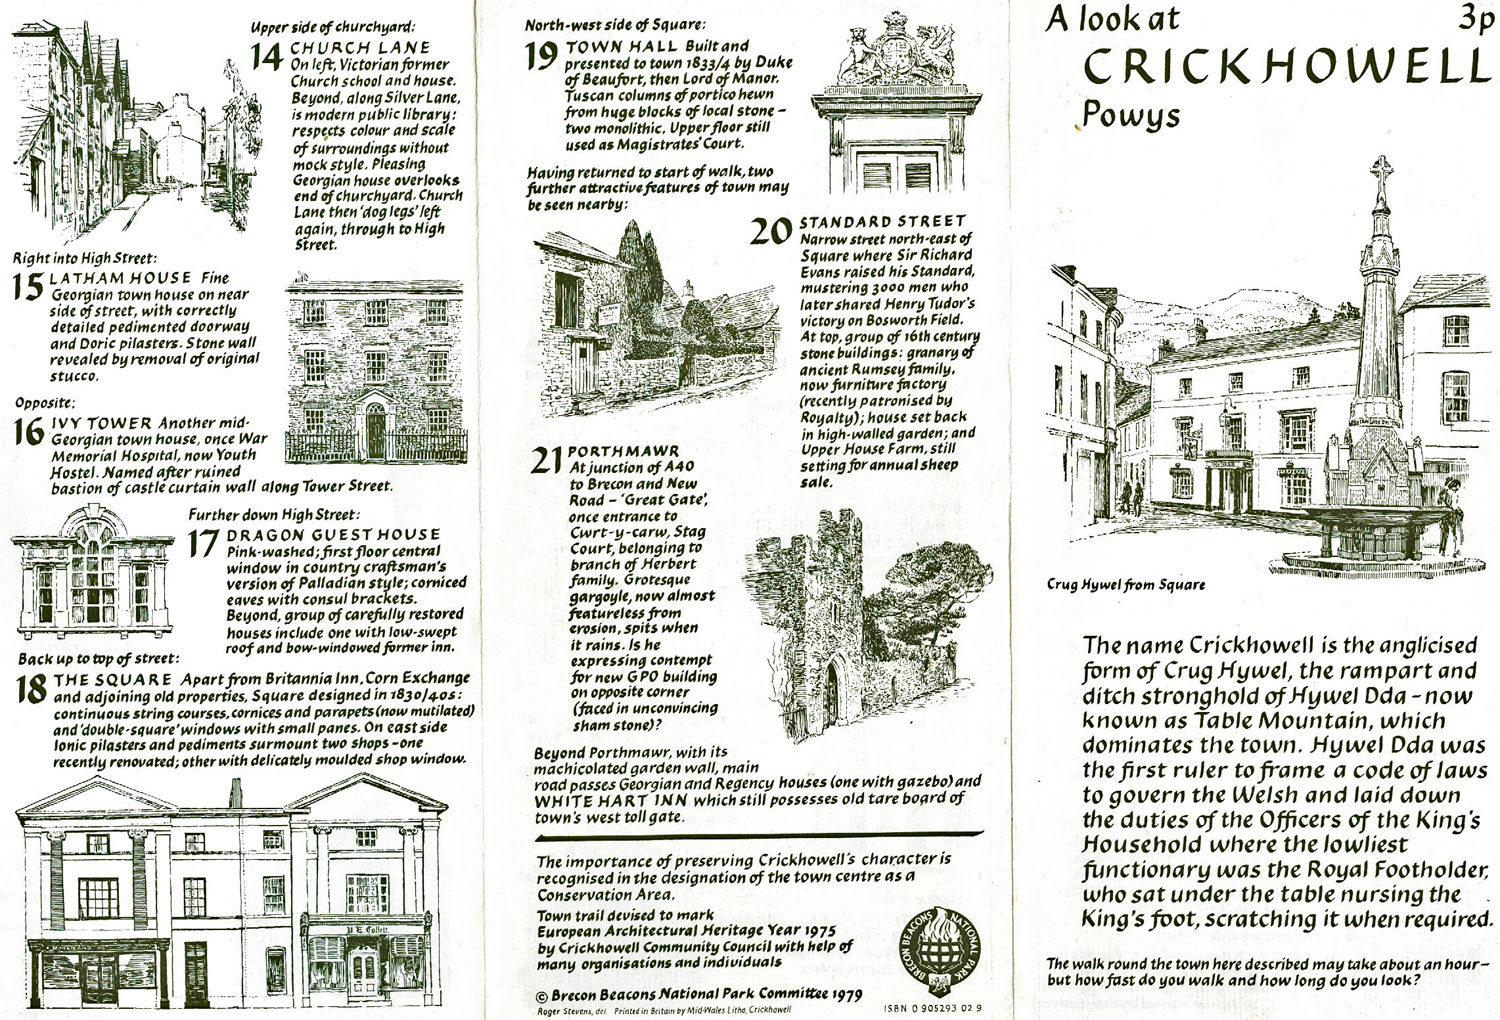 Crickhowell map and brochure